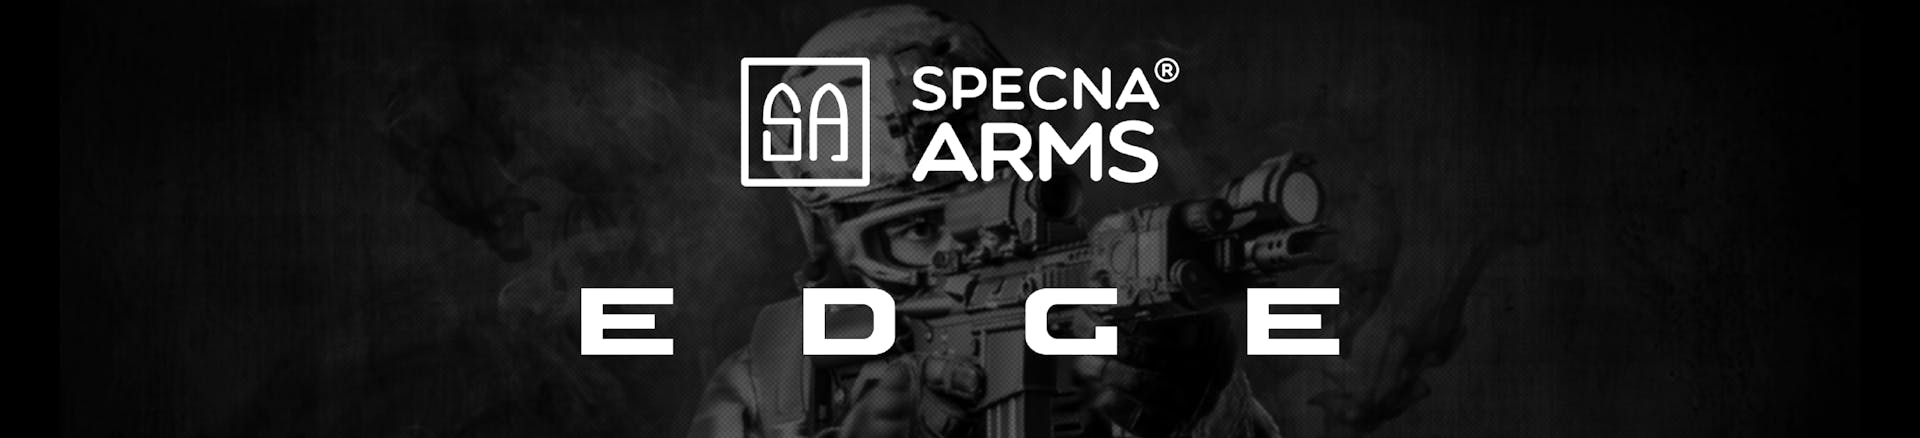 Brand Landing - Specna Arms - Edge - Title